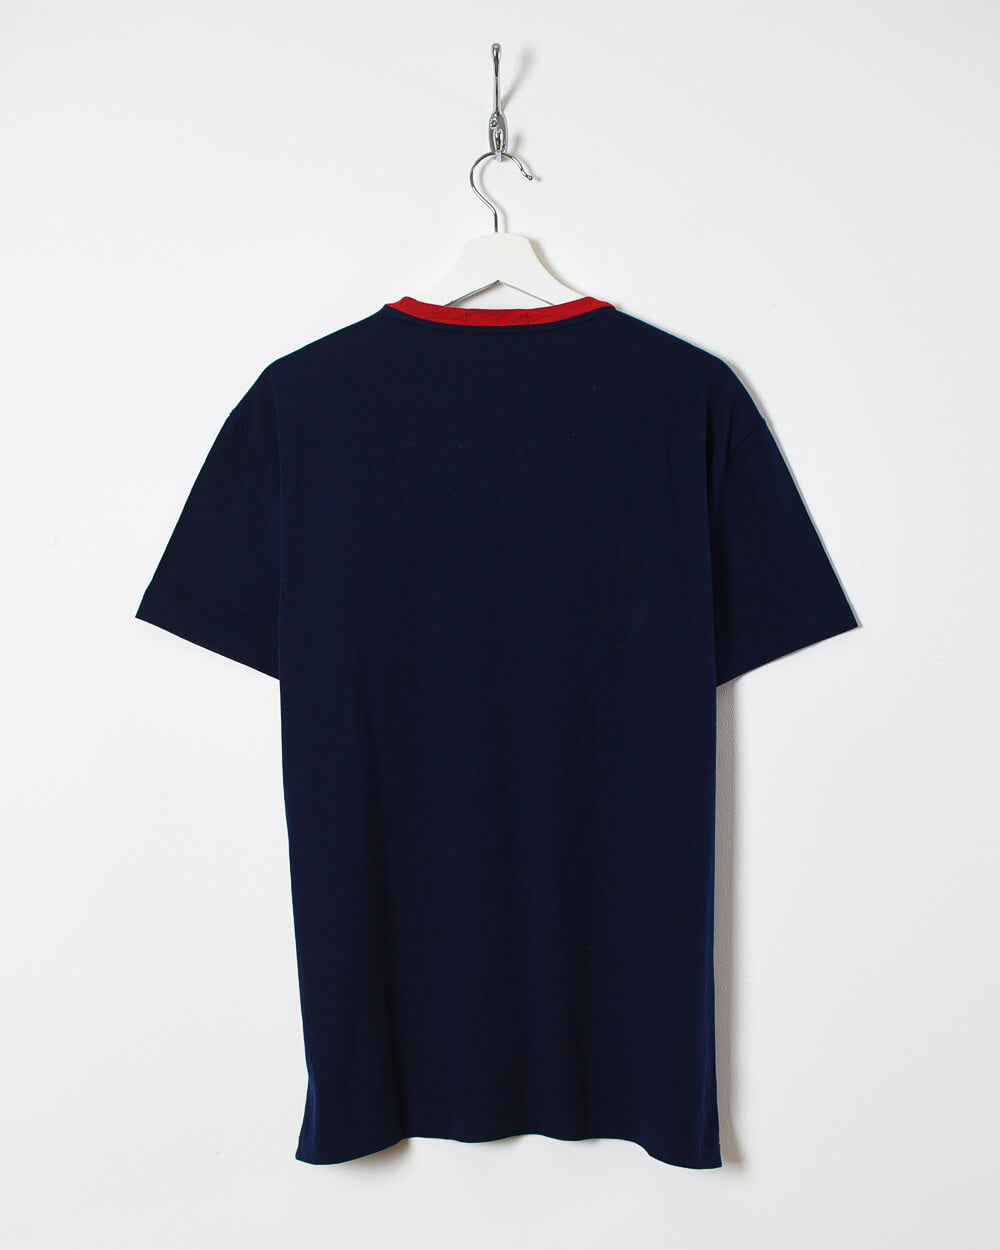 Ralph Lauren Polo Hi Tech T-Shirt - Medium - Domno Vintage 90s, 80s, 00s Retro and Vintage Clothing 